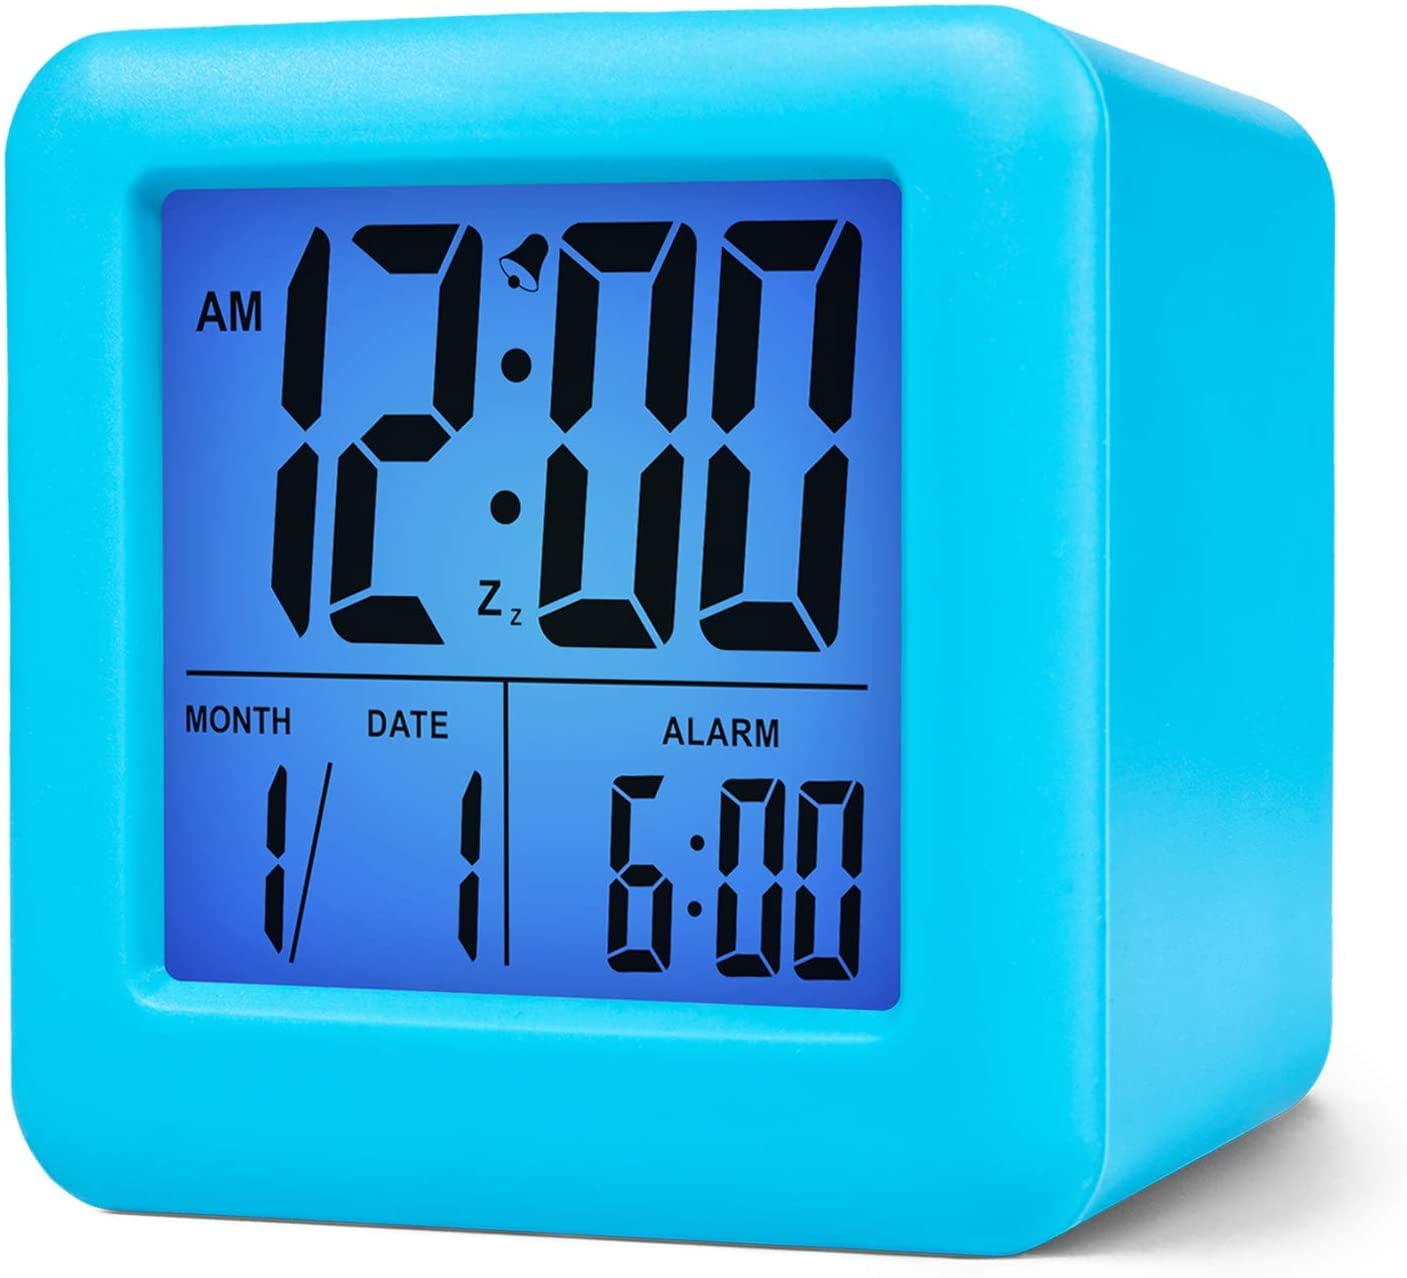 Digital Alarm Clocks Ascending Sound White Plumeet Kids Clock with Snooze and White Nightlight Date Battery Powered Alarm Easy Setting Travel Alarm Clocks Display Time 